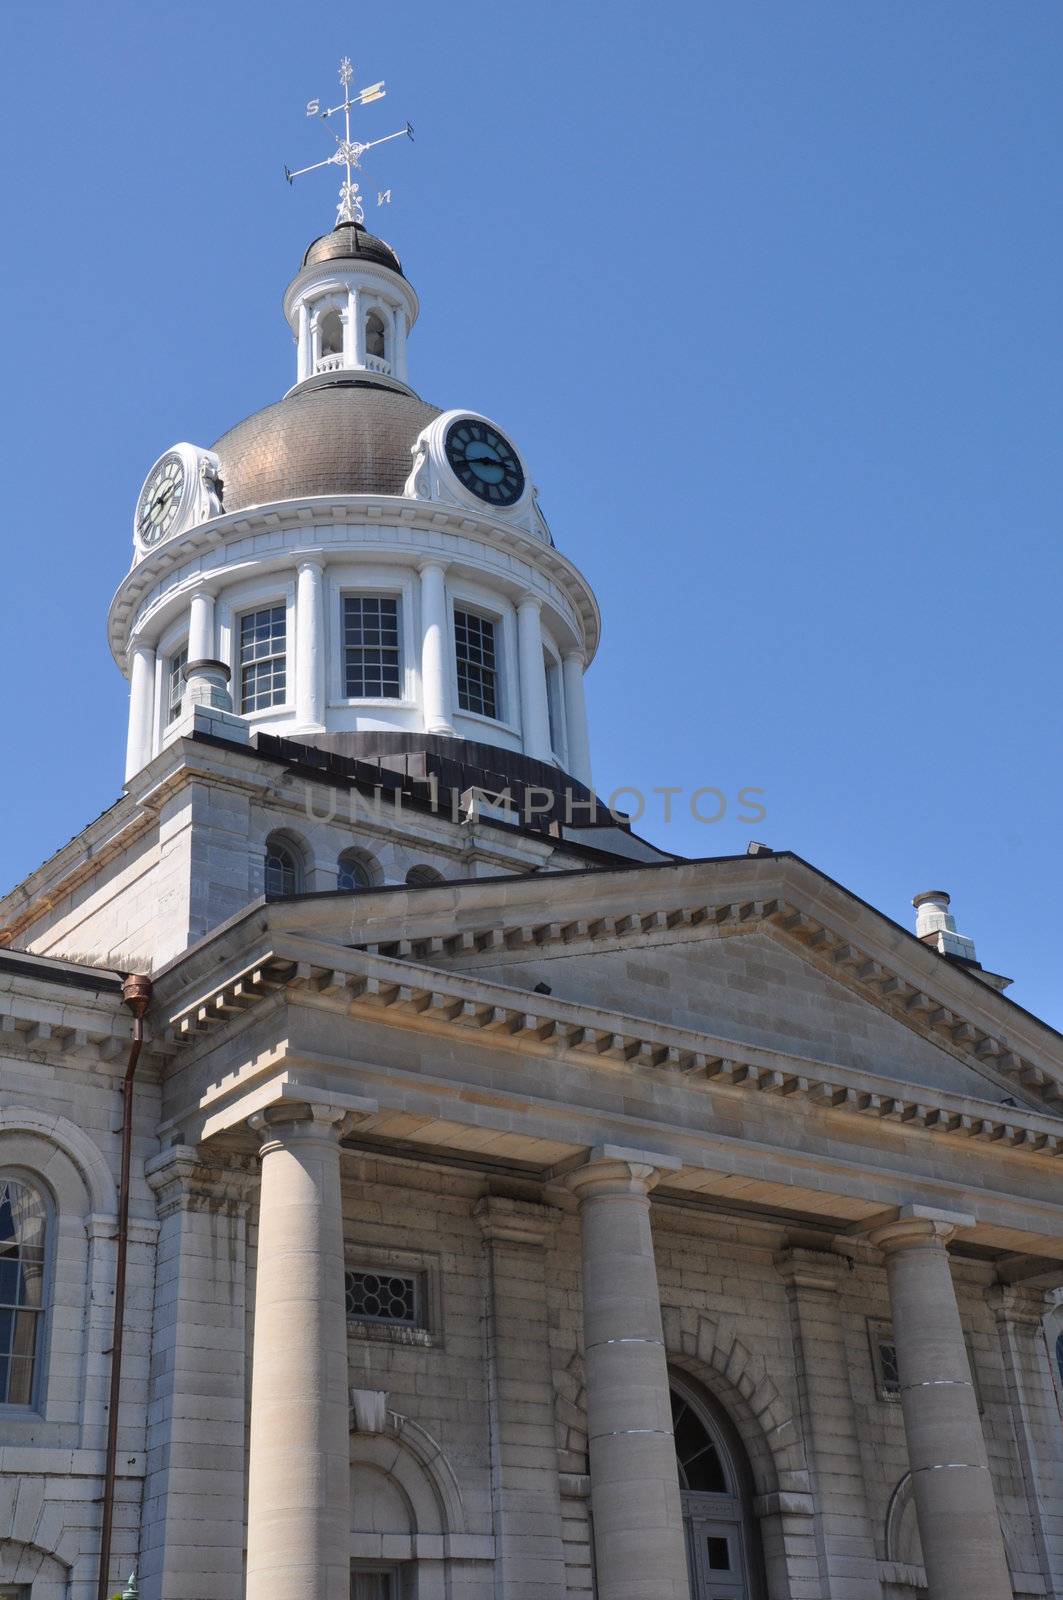 Kingston City Hall in Canada by sainaniritu